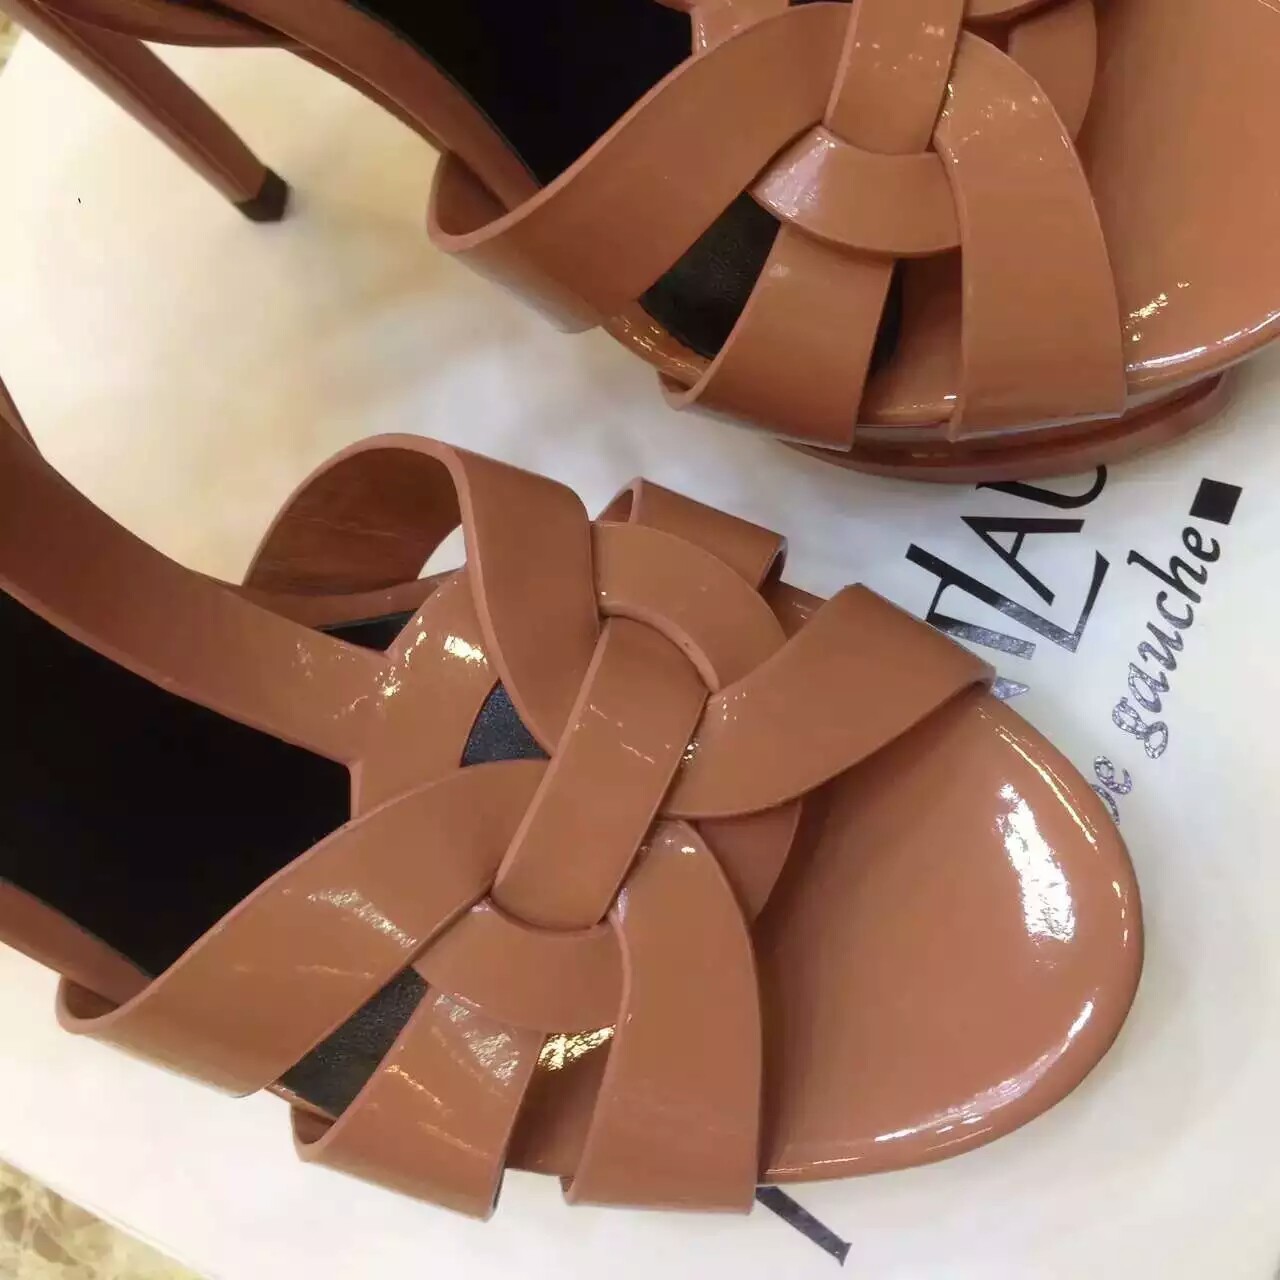 2016 Saint Laurent Shoes Cheap Sale-Saint Laurent Jodie 105 Strappy Sandal in Cameo Patent Leather - Click Image to Close